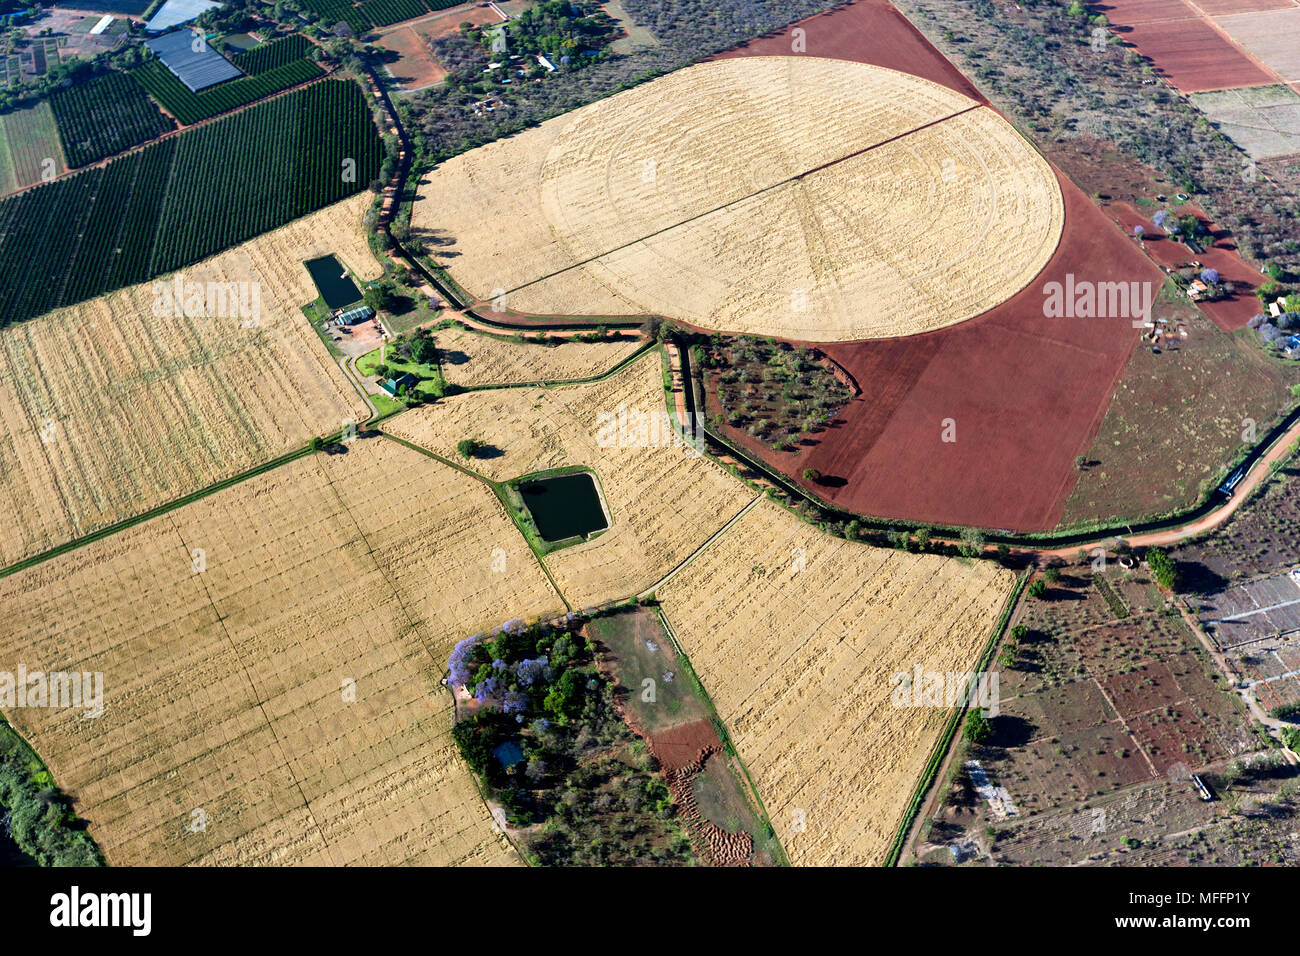 Aerial view of Hartebeesport dam farm land. South Africa Stock Photo